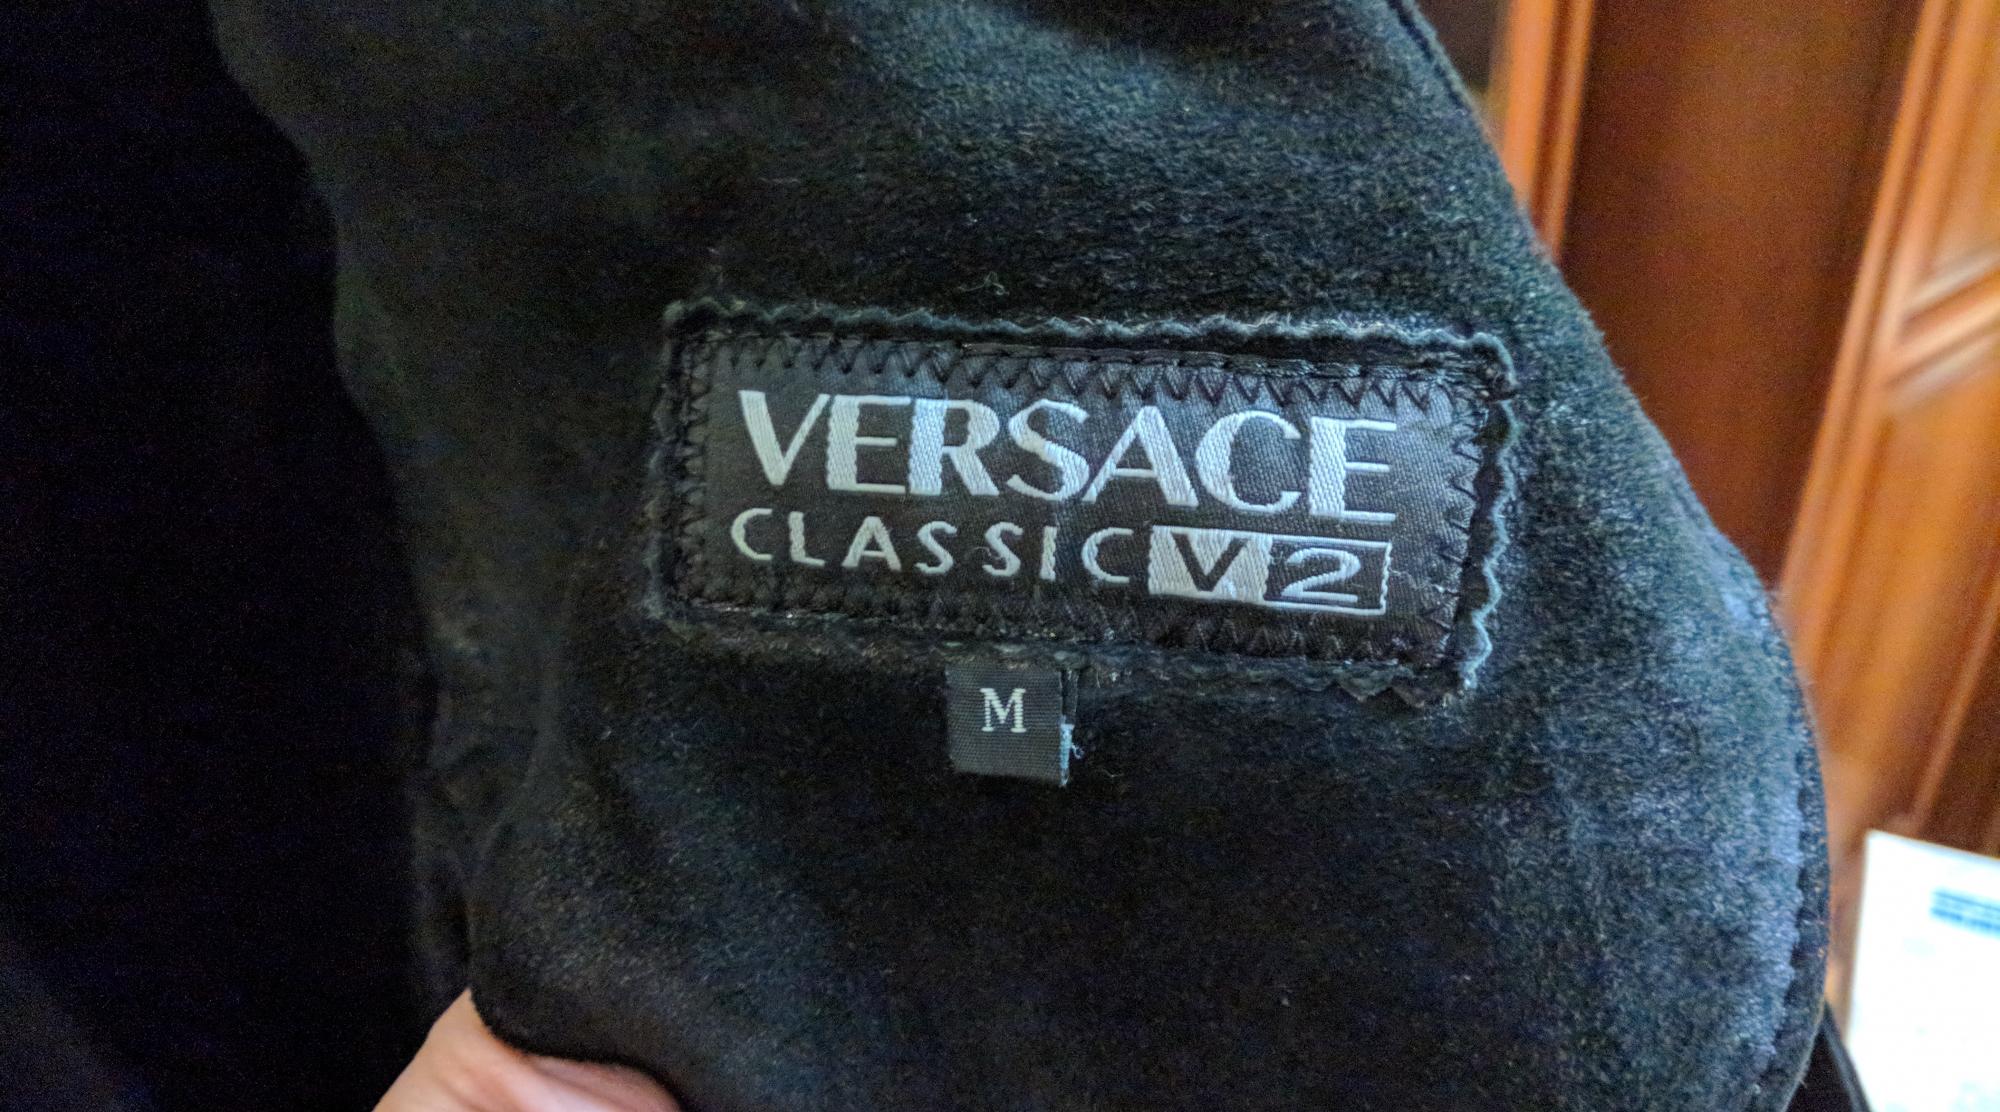 Versace Classic v2 этикетка